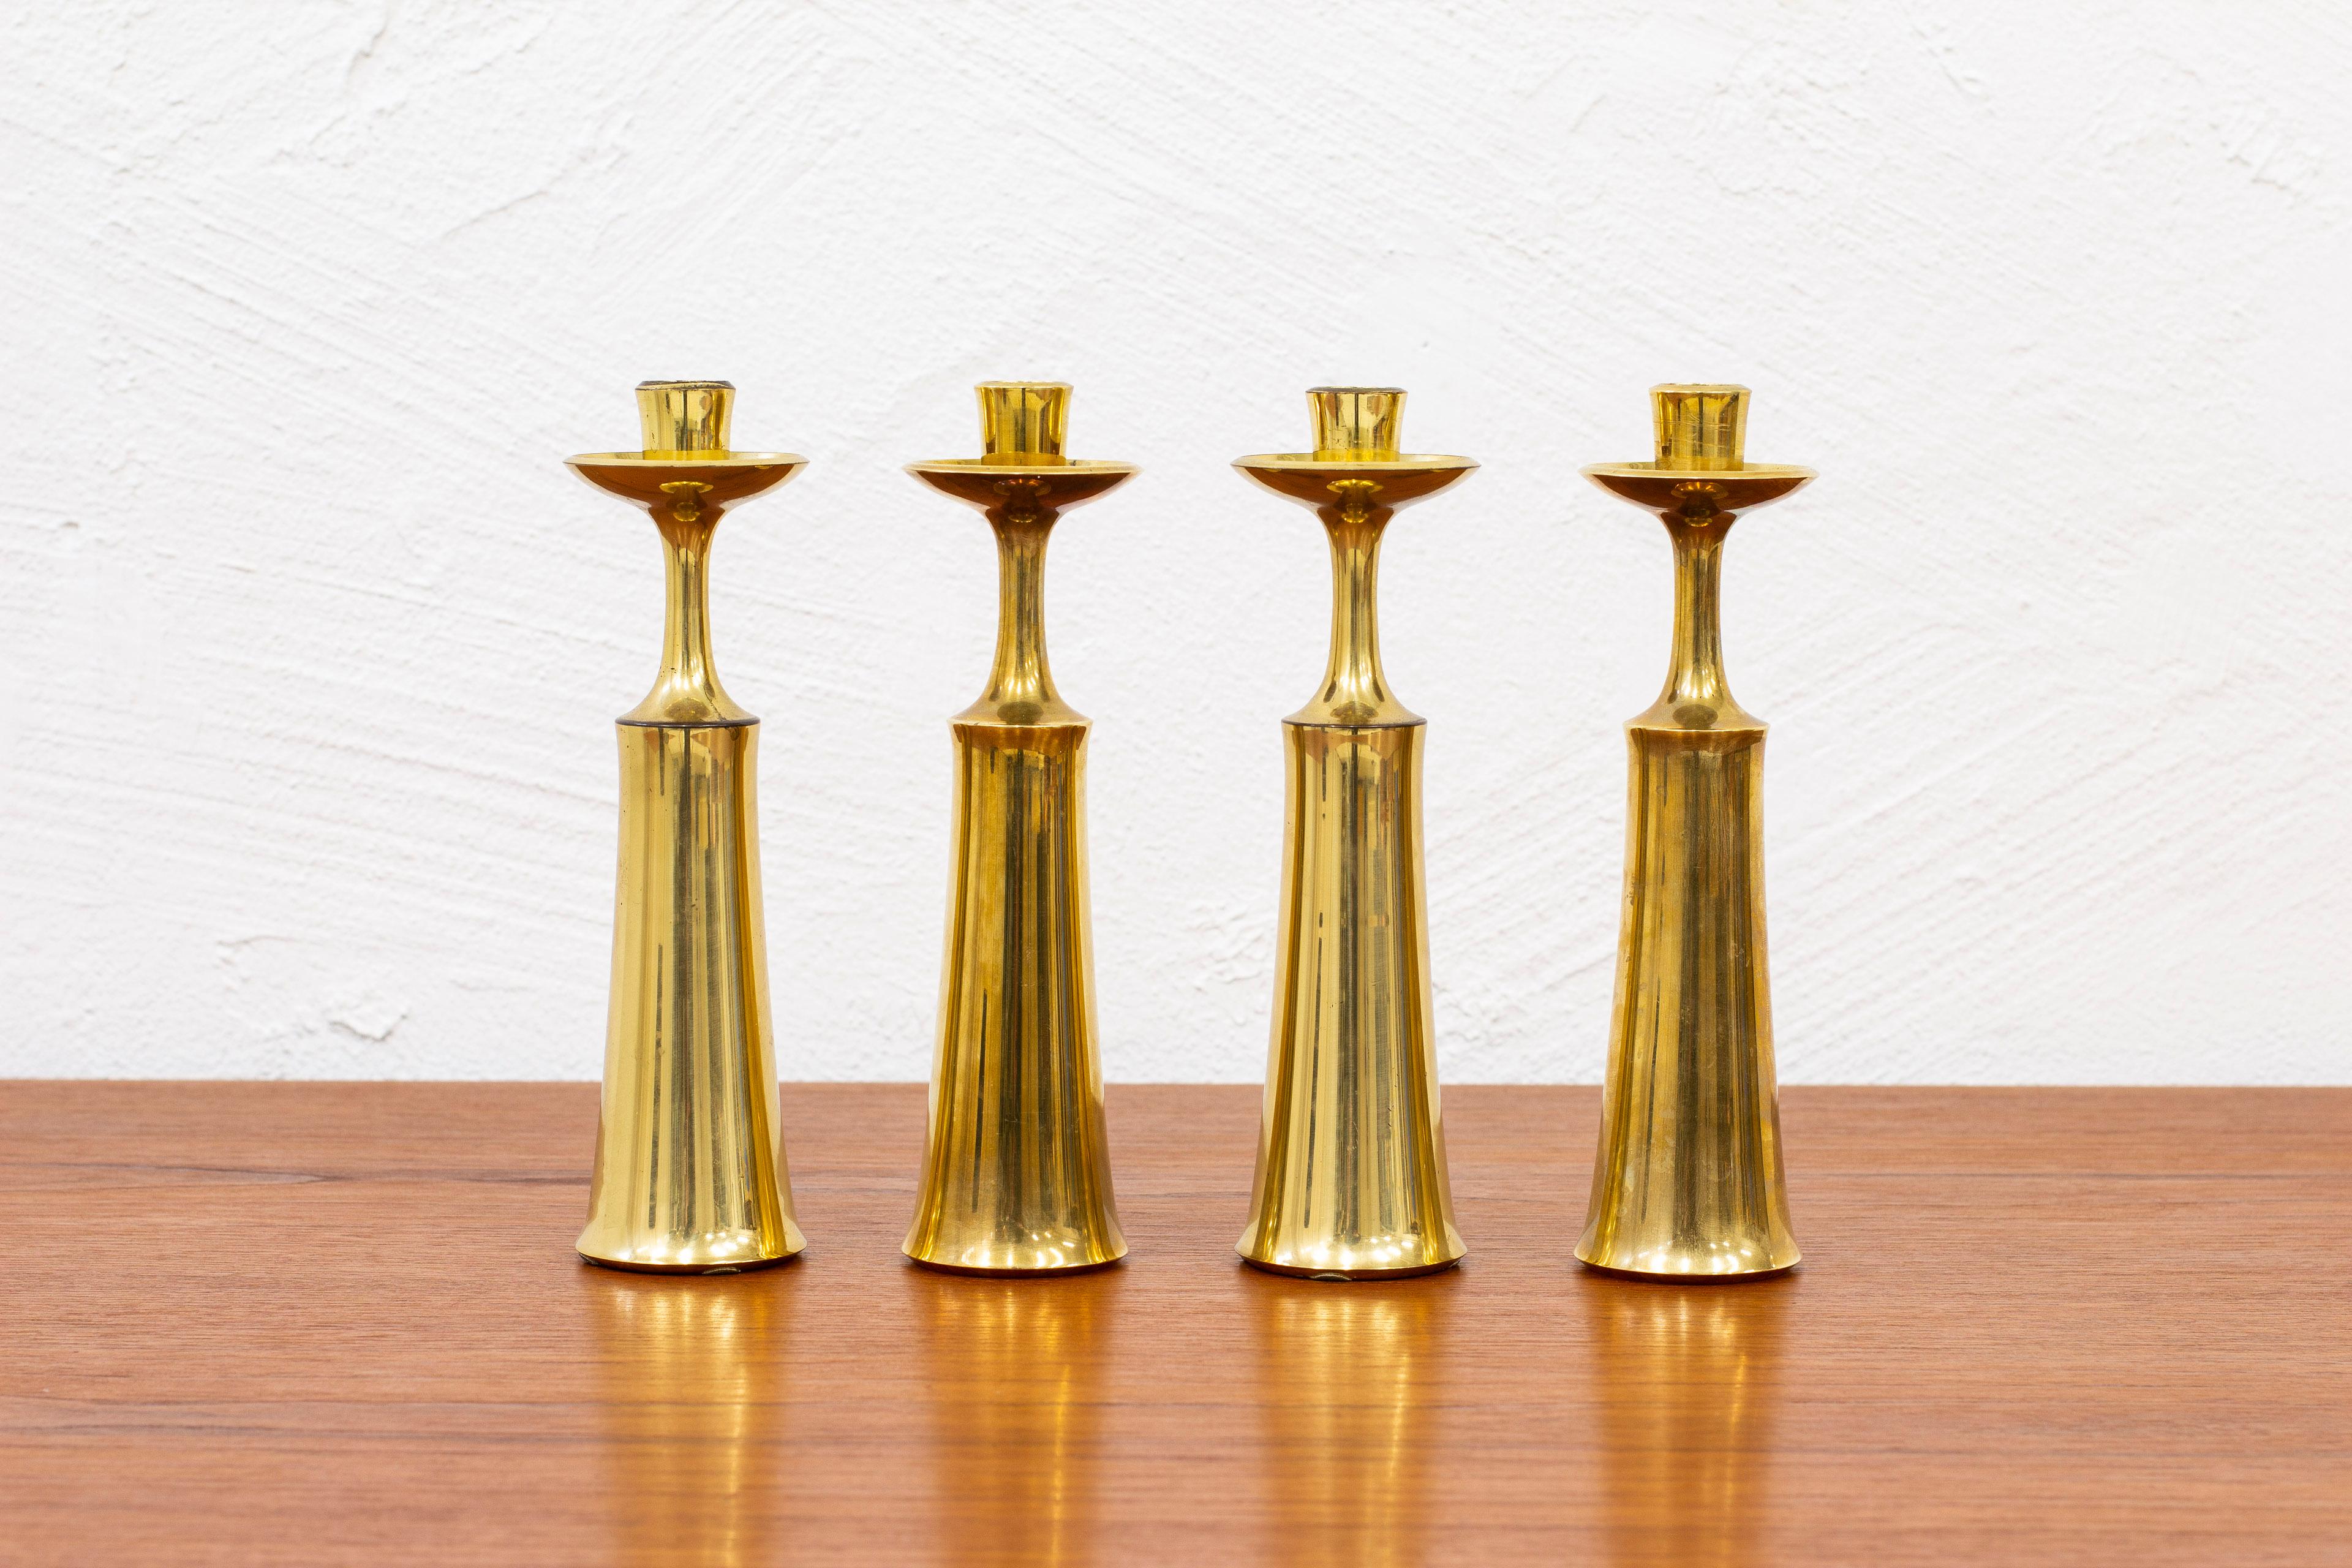 Scandinavian Modern Candle Sticks in Brass by Jens Harald Quistgaard for Dansk Designs, 1950s